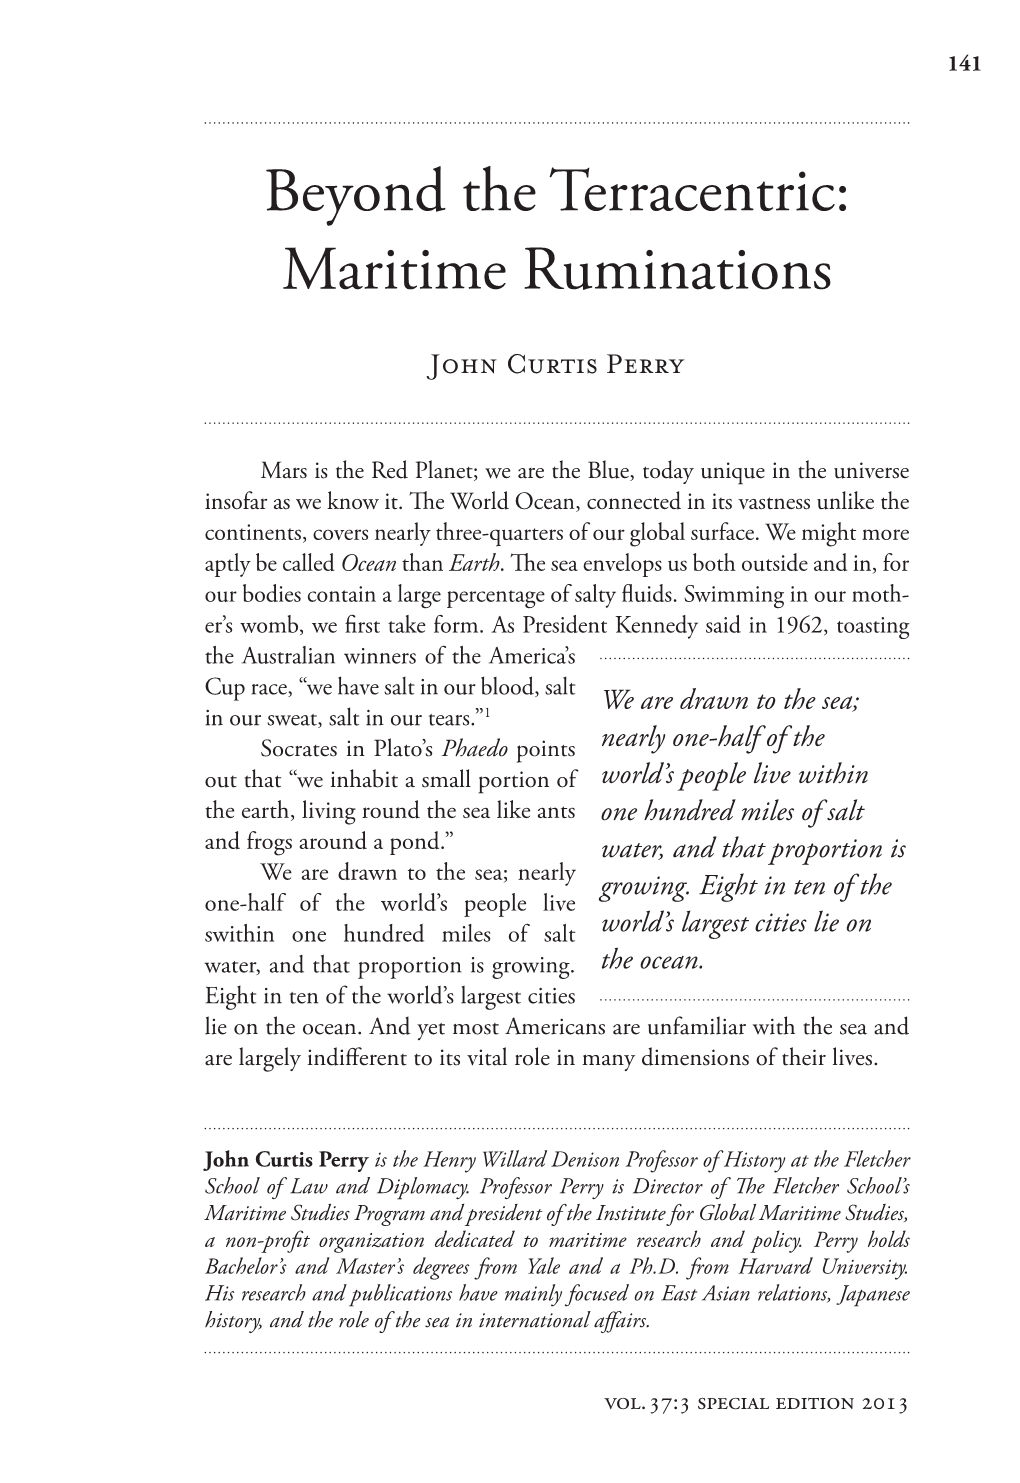 Maritime Ruminations